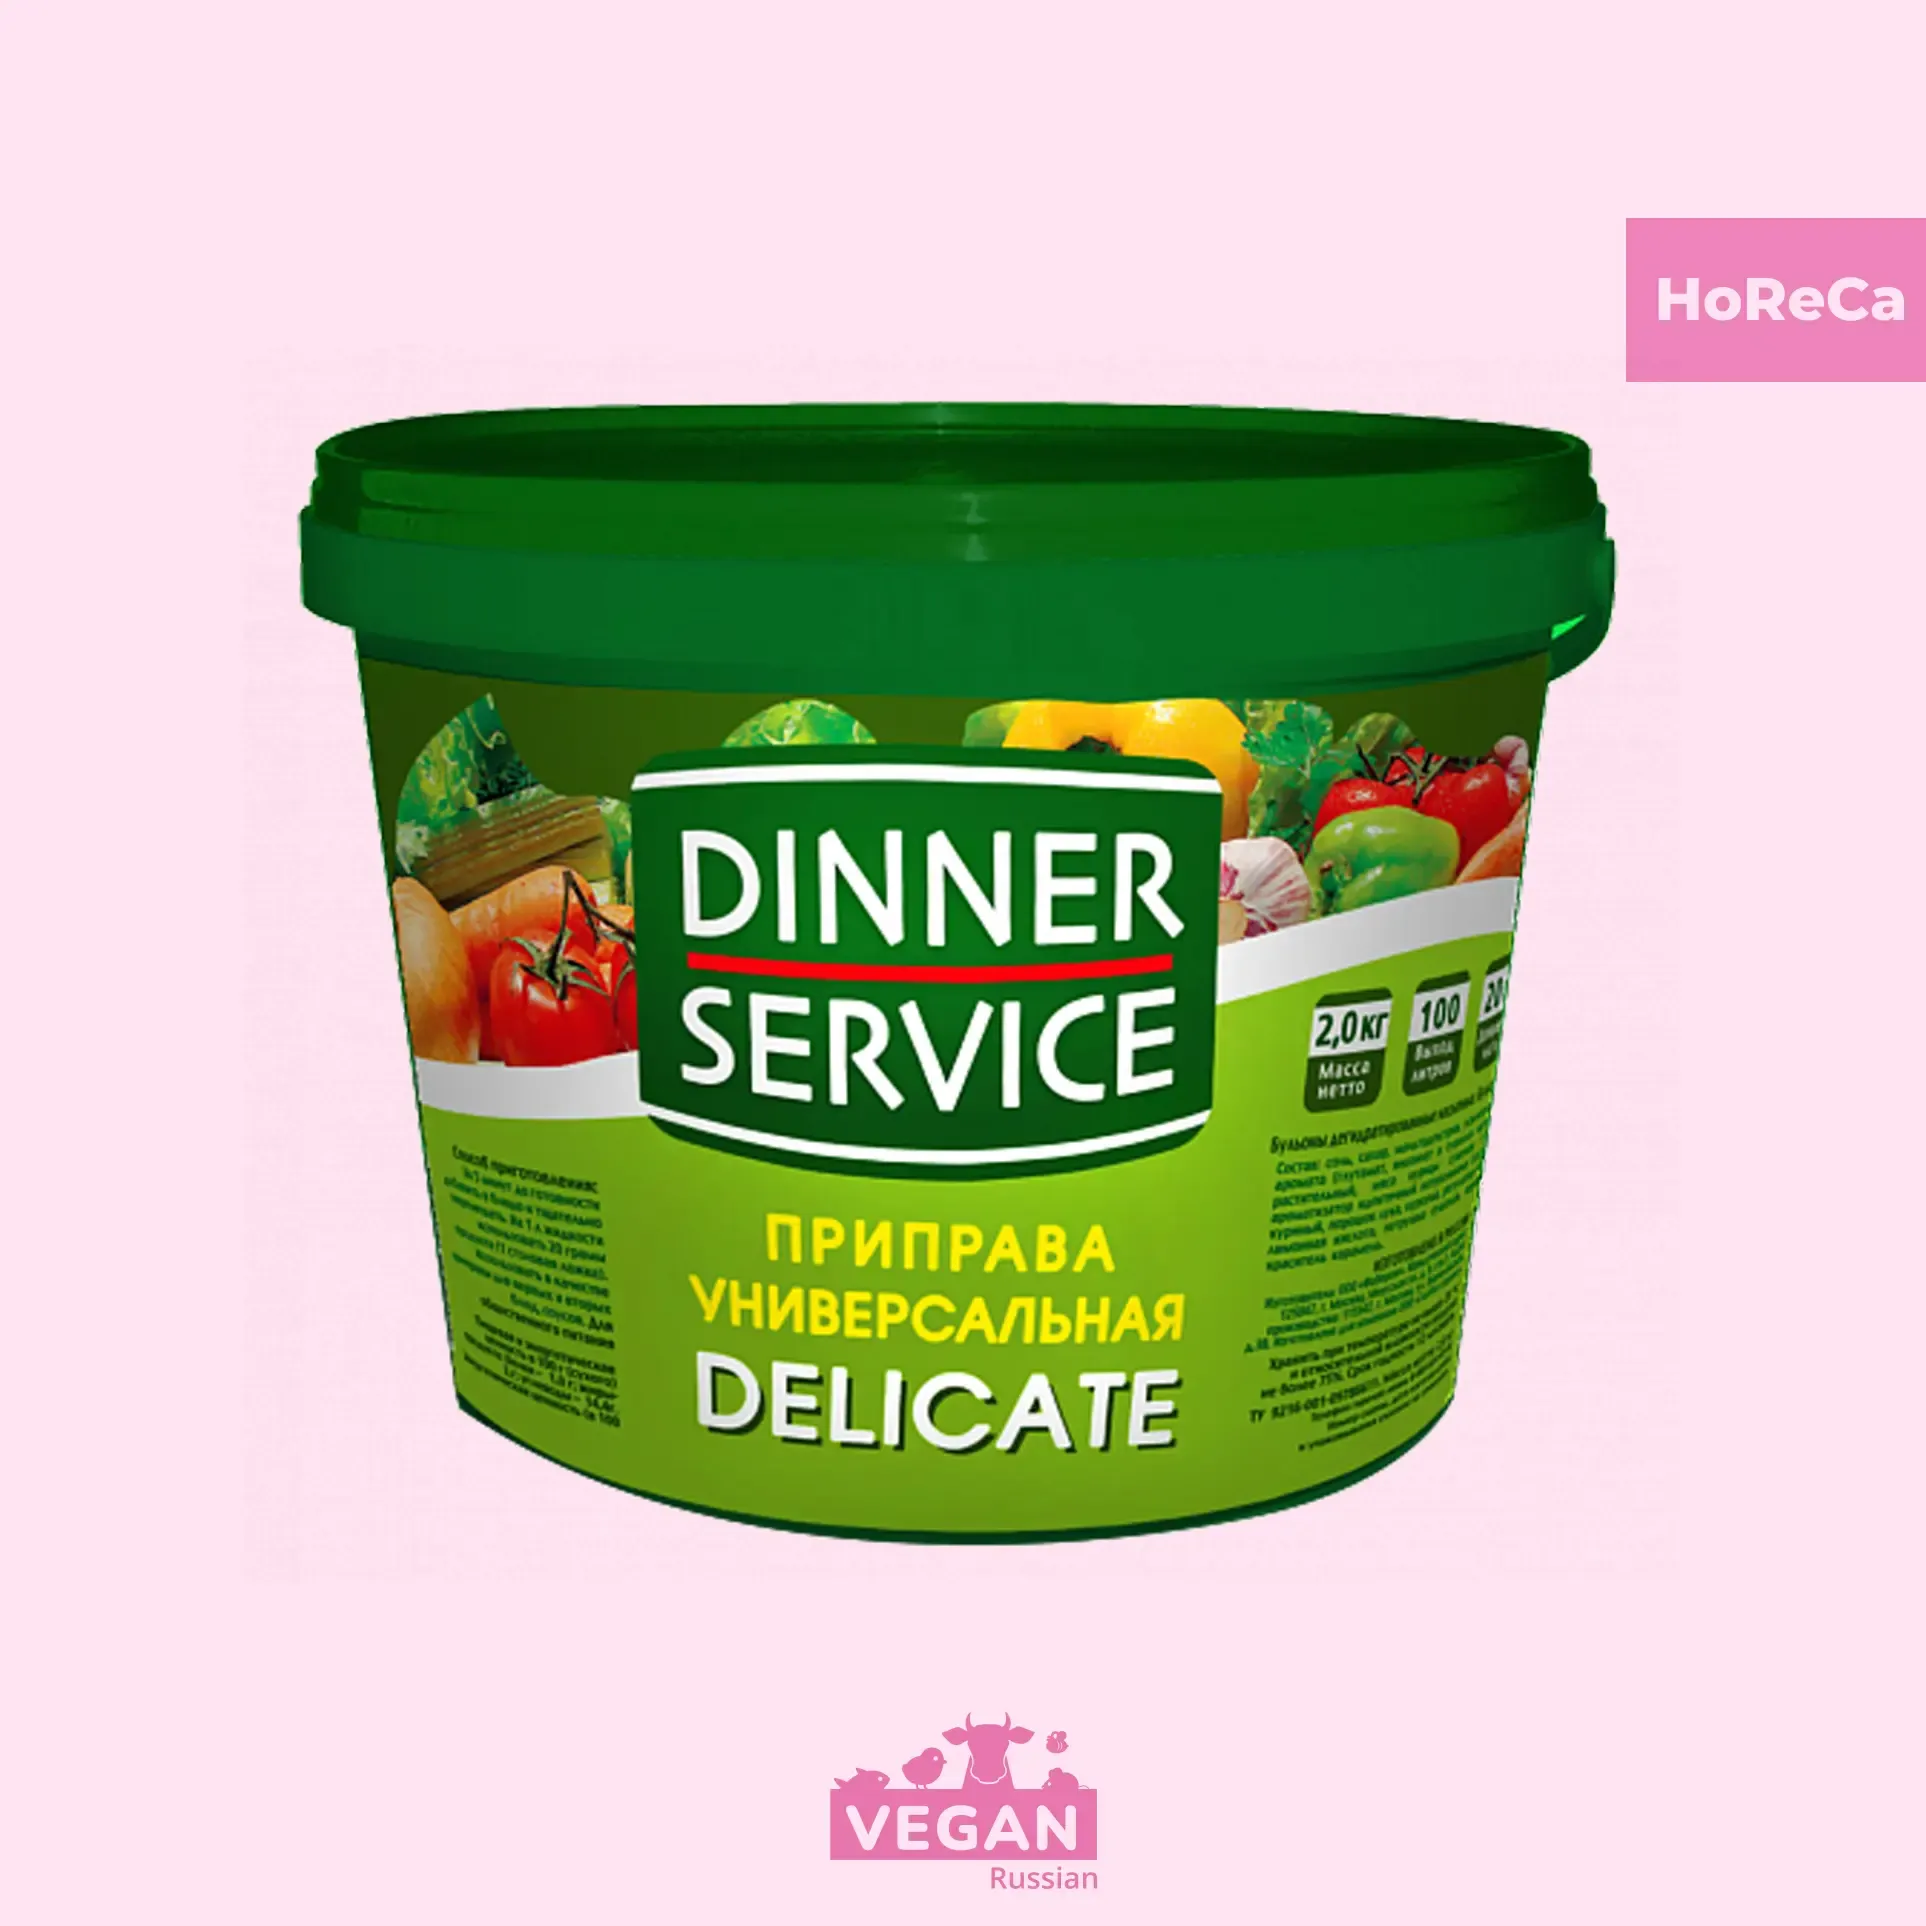 Приправа универсальная Delicate Dinner Service 2 кг